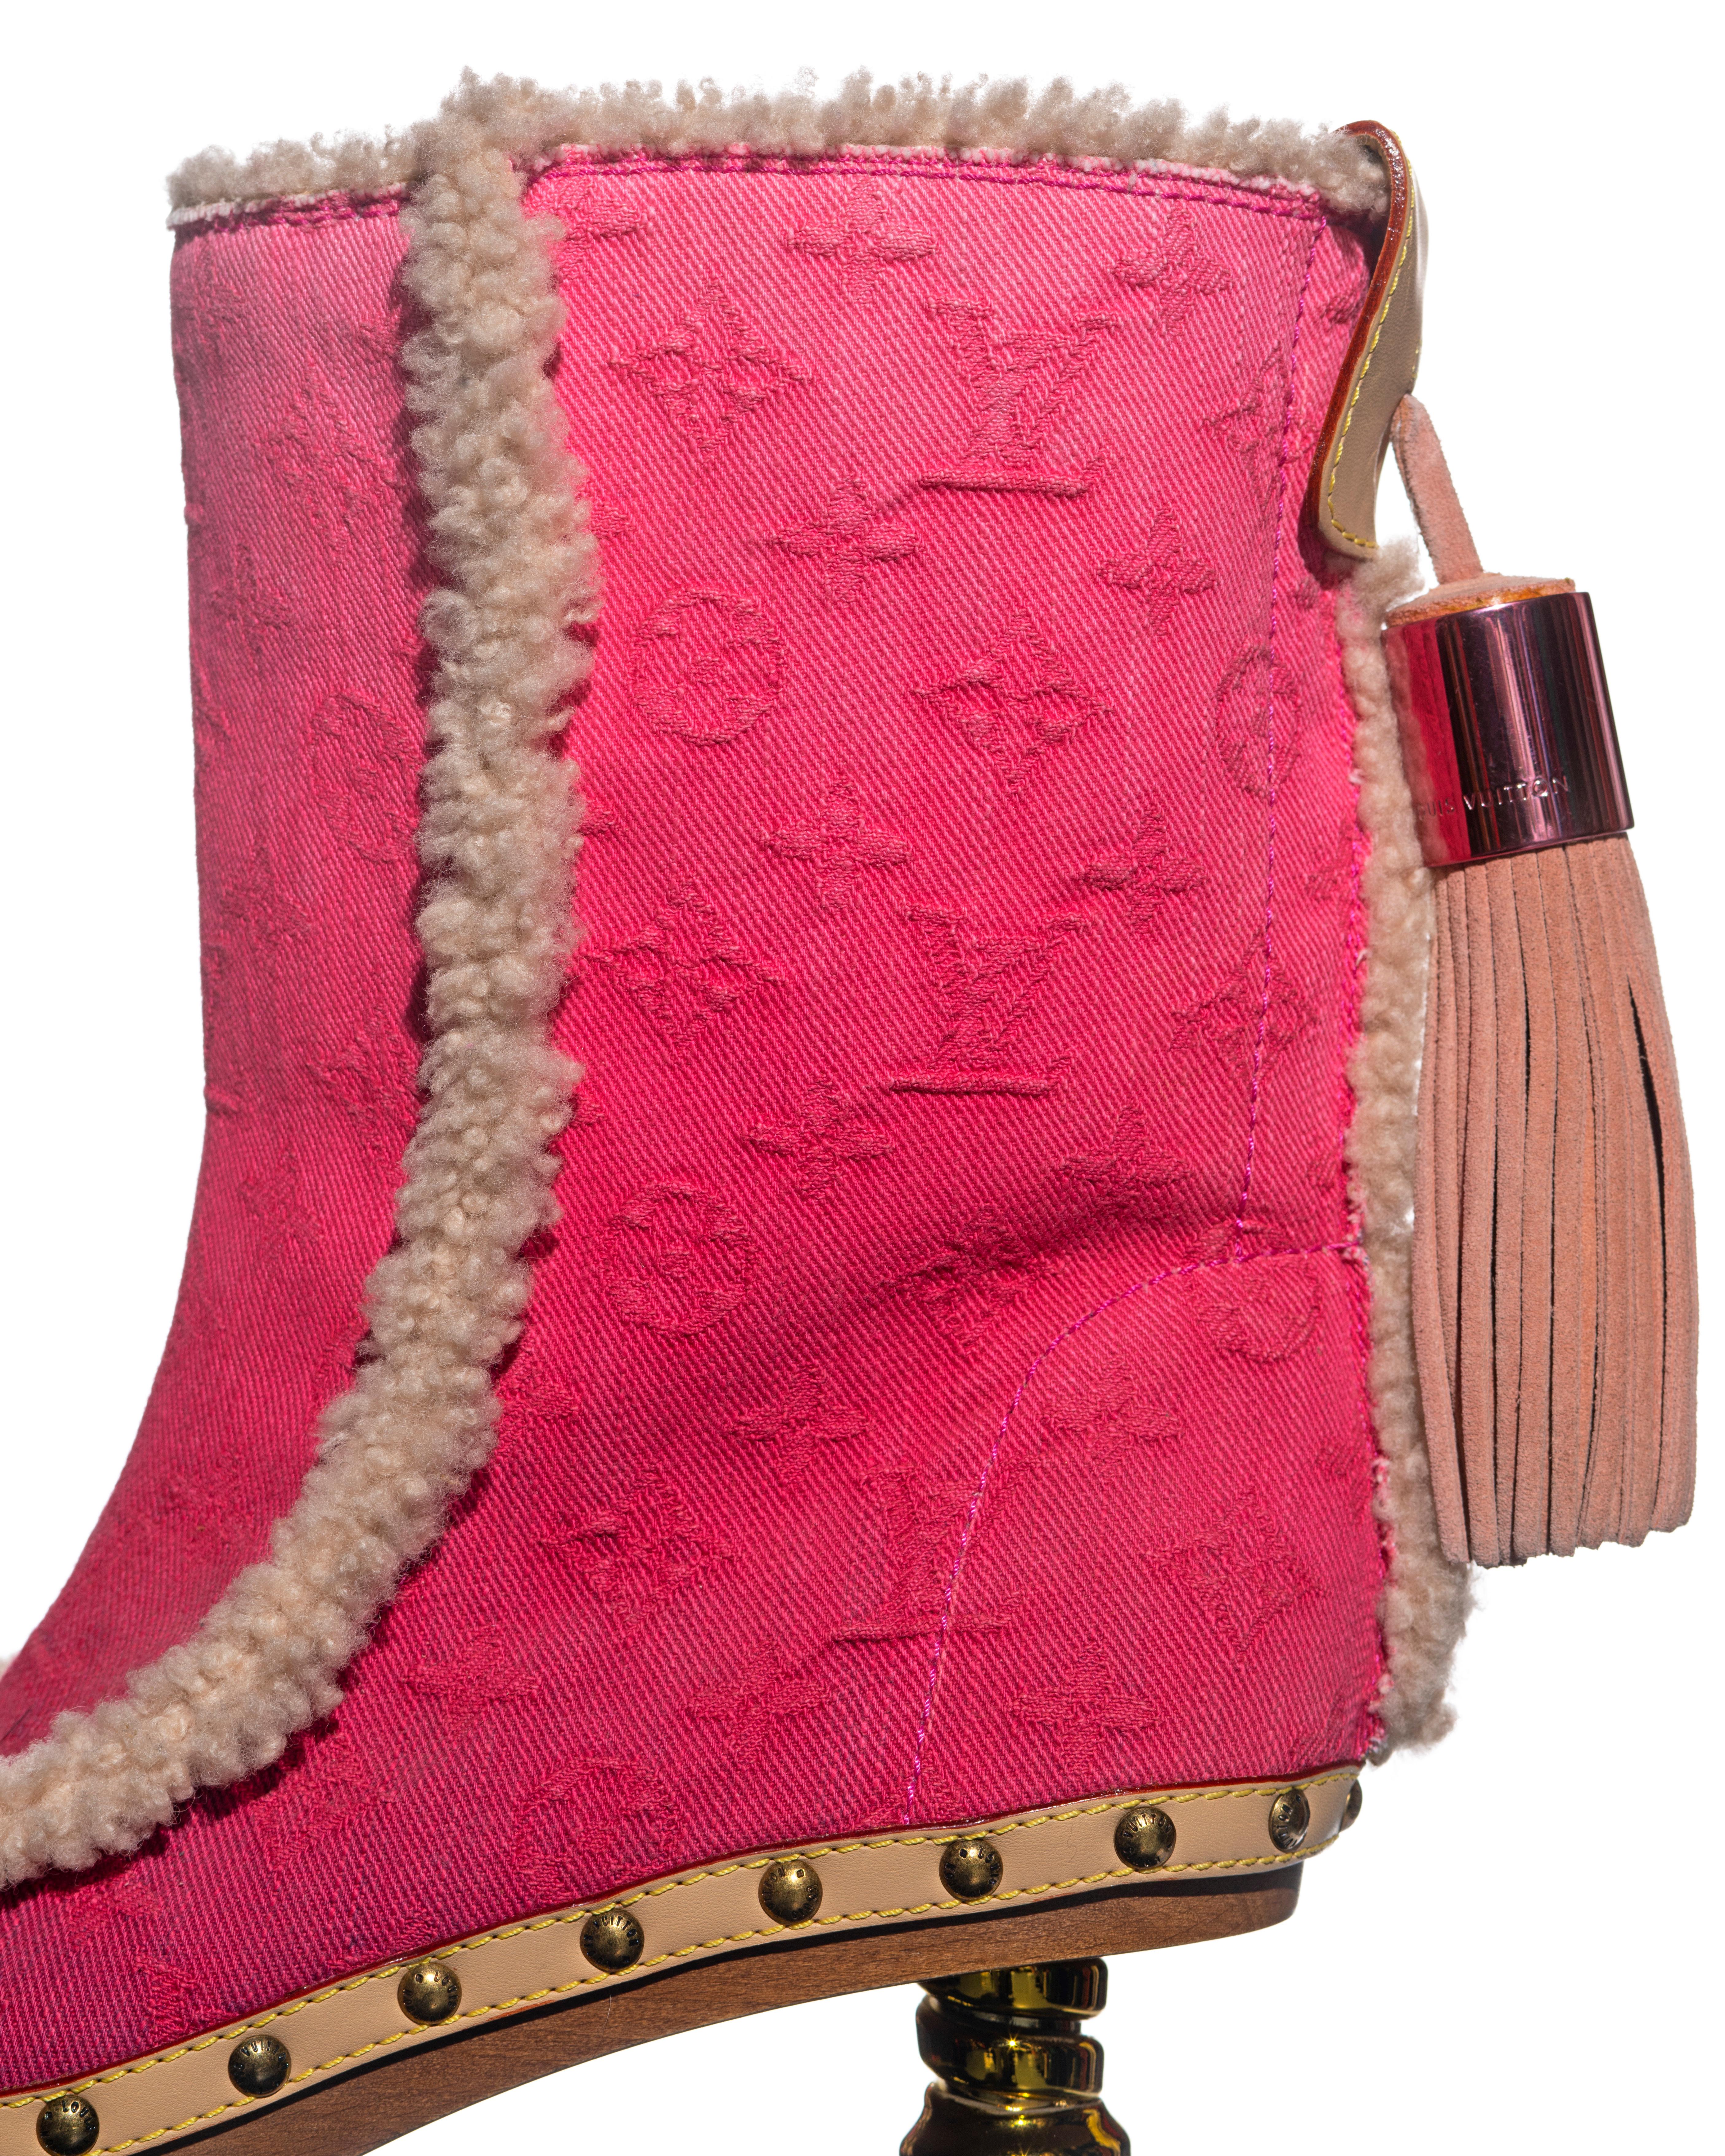 pink louis vuitton boots